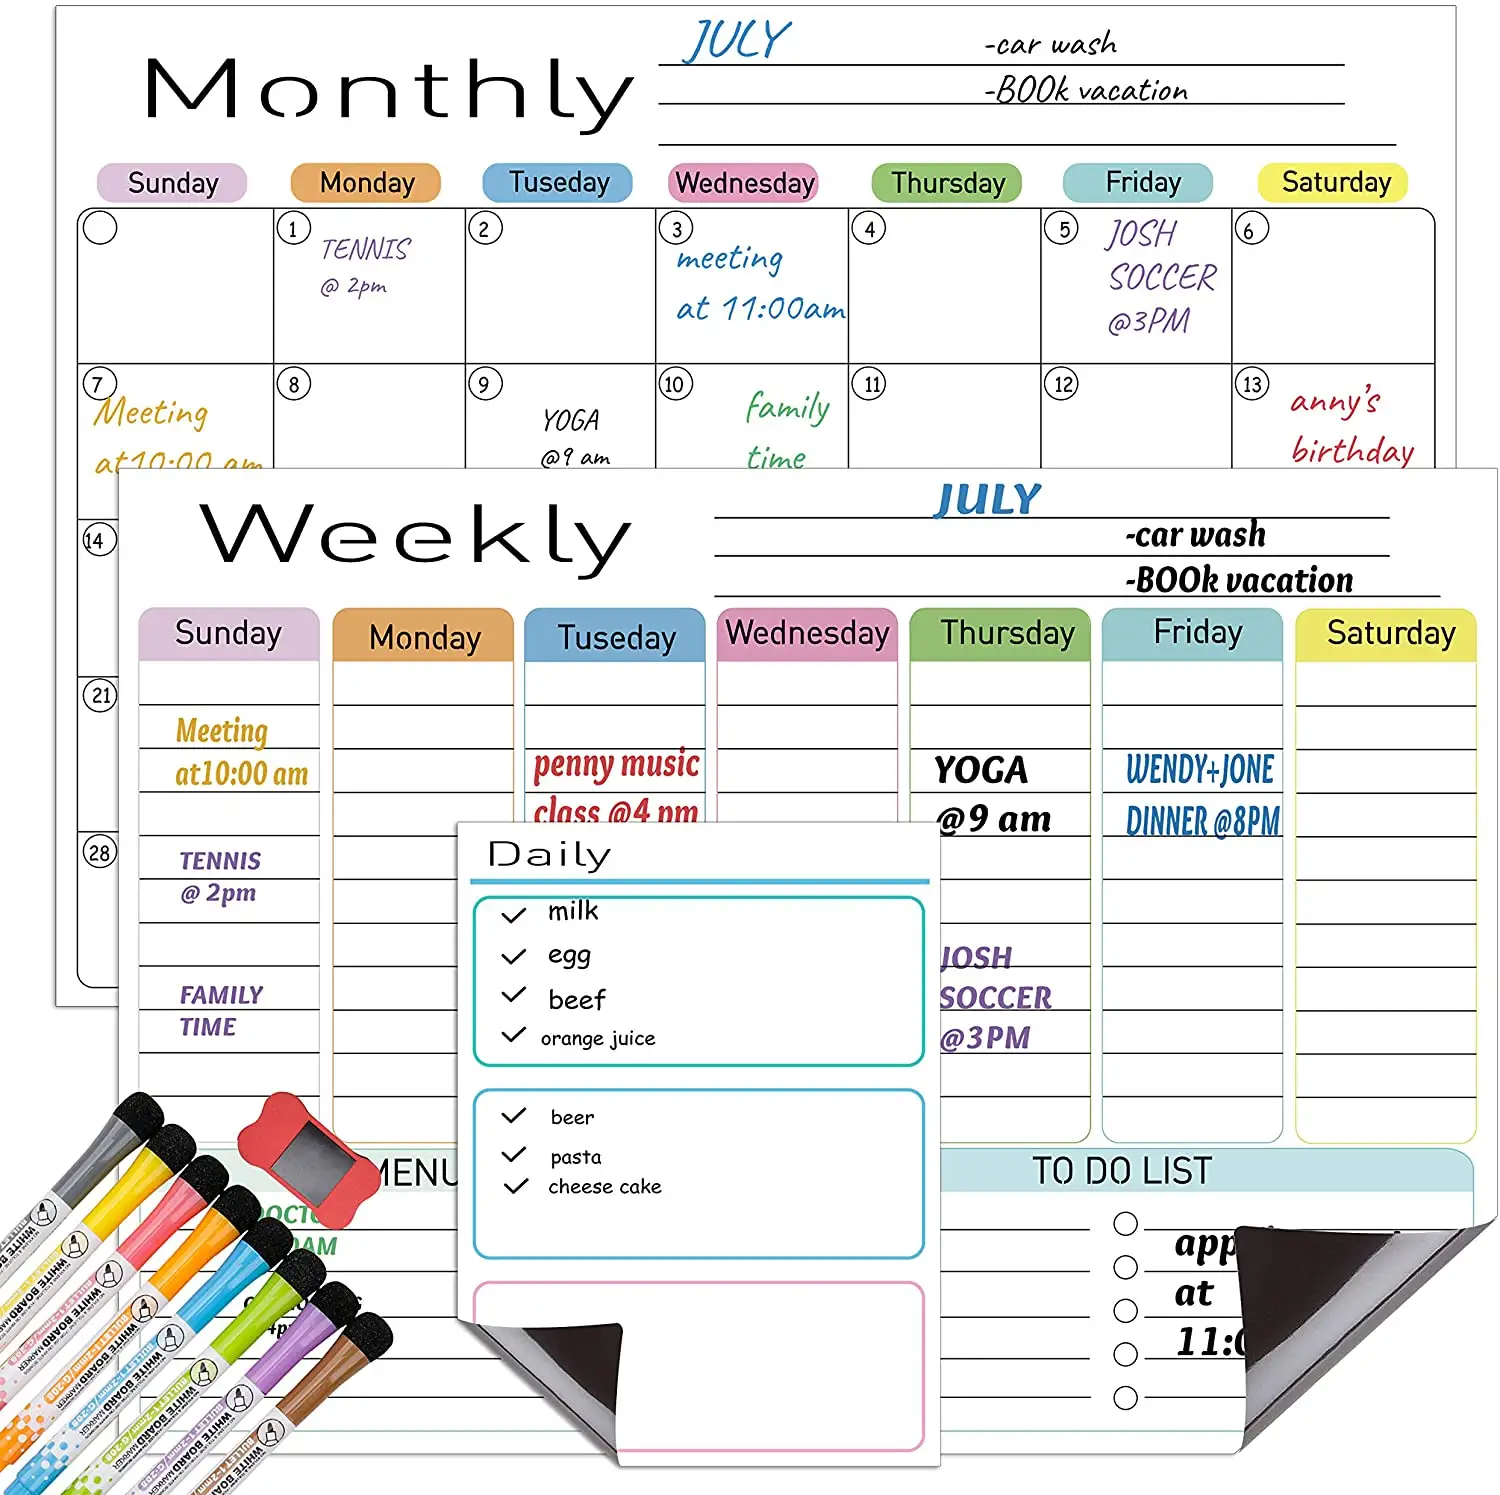 Monthly Weekly Organizer Fridge Family Calendar Dry Erase White Board For Kid